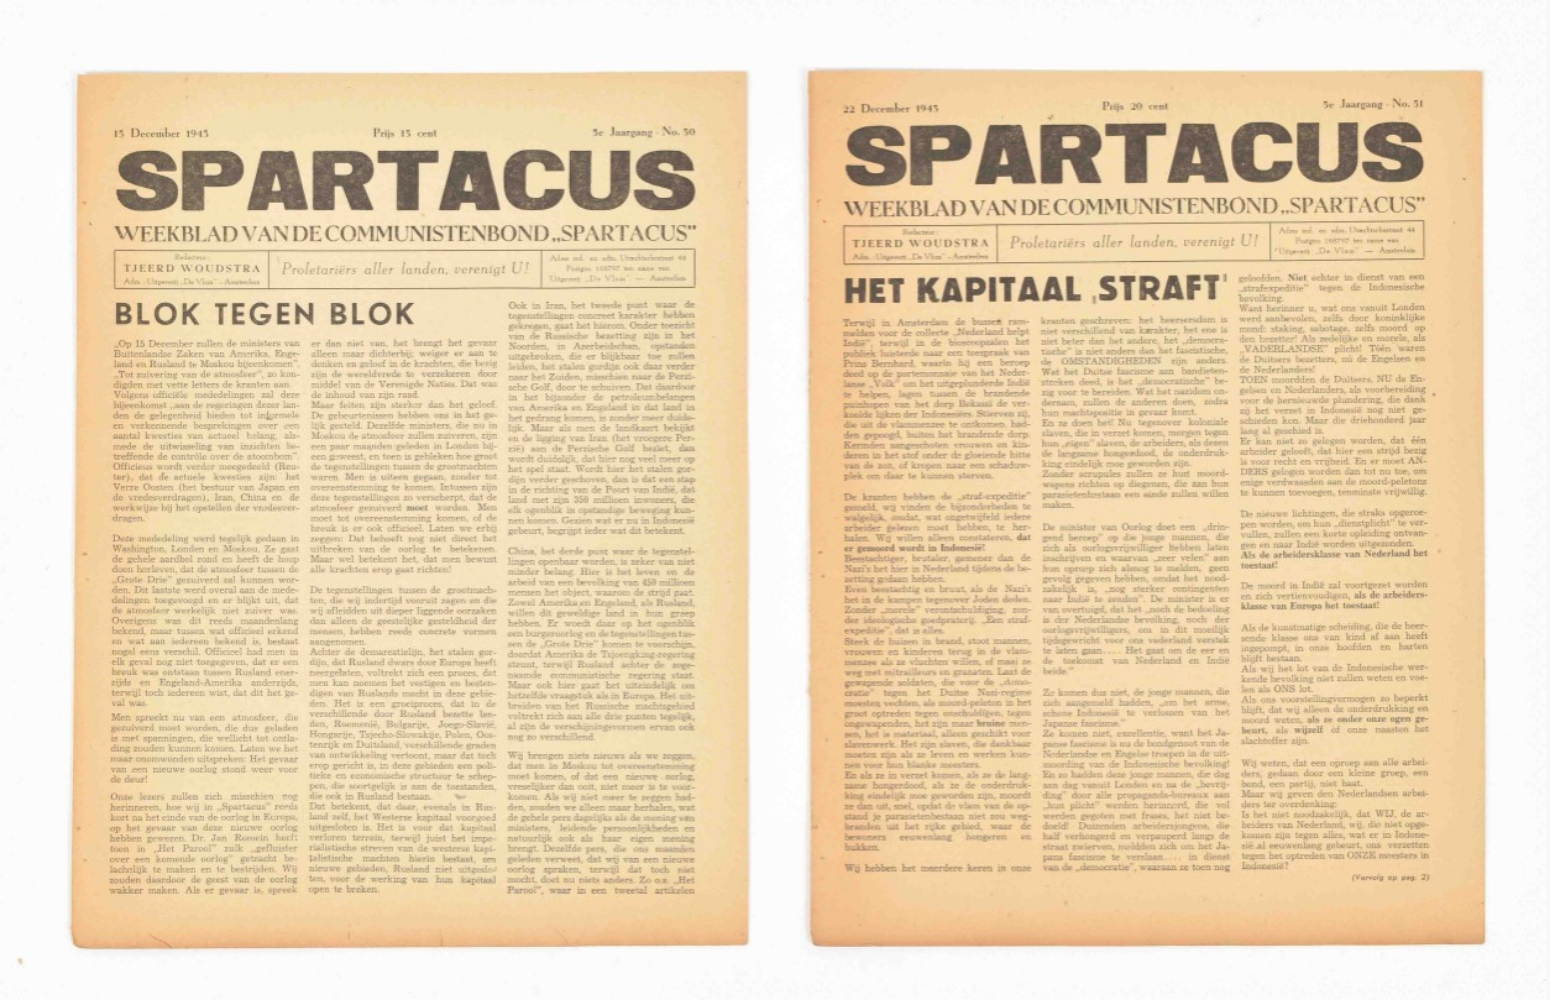 Spartacus. Weekblad van de Communistenbond "Spartacus" - Image 6 of 7